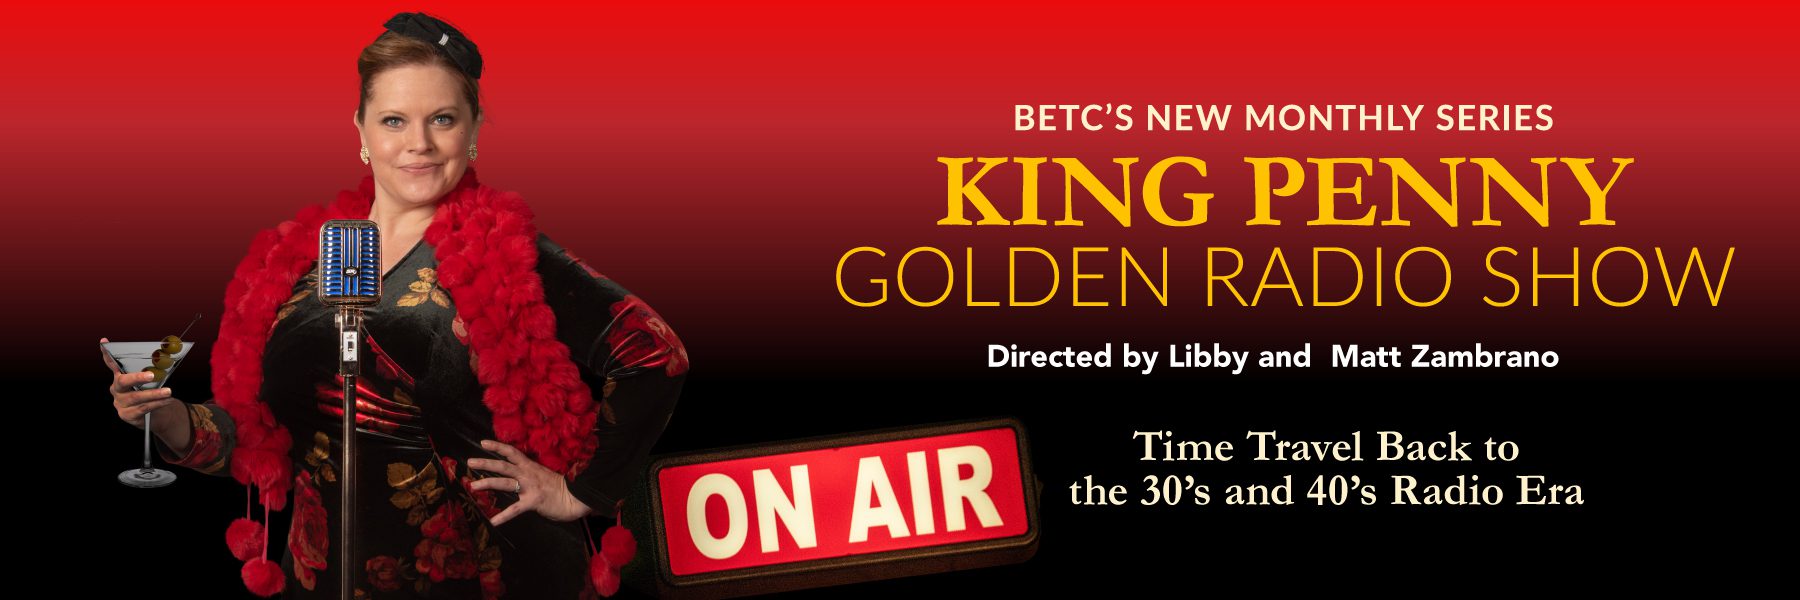 King Penny Golden Radio Show